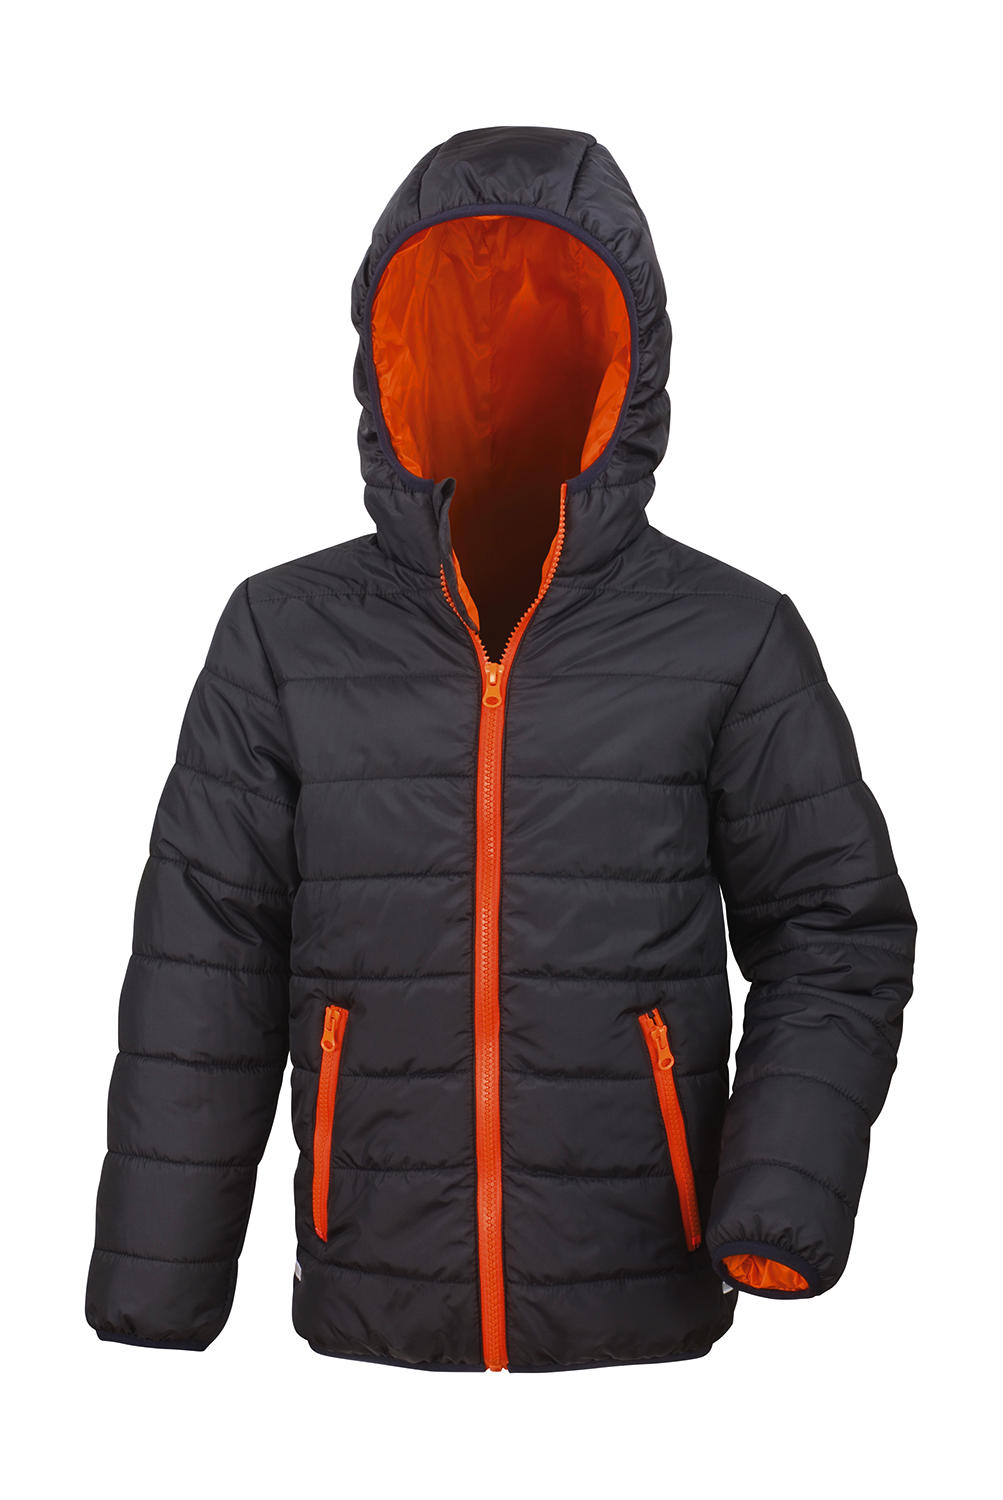  Junior/Youth Soft Padded Jacket in Farbe Black/Orange